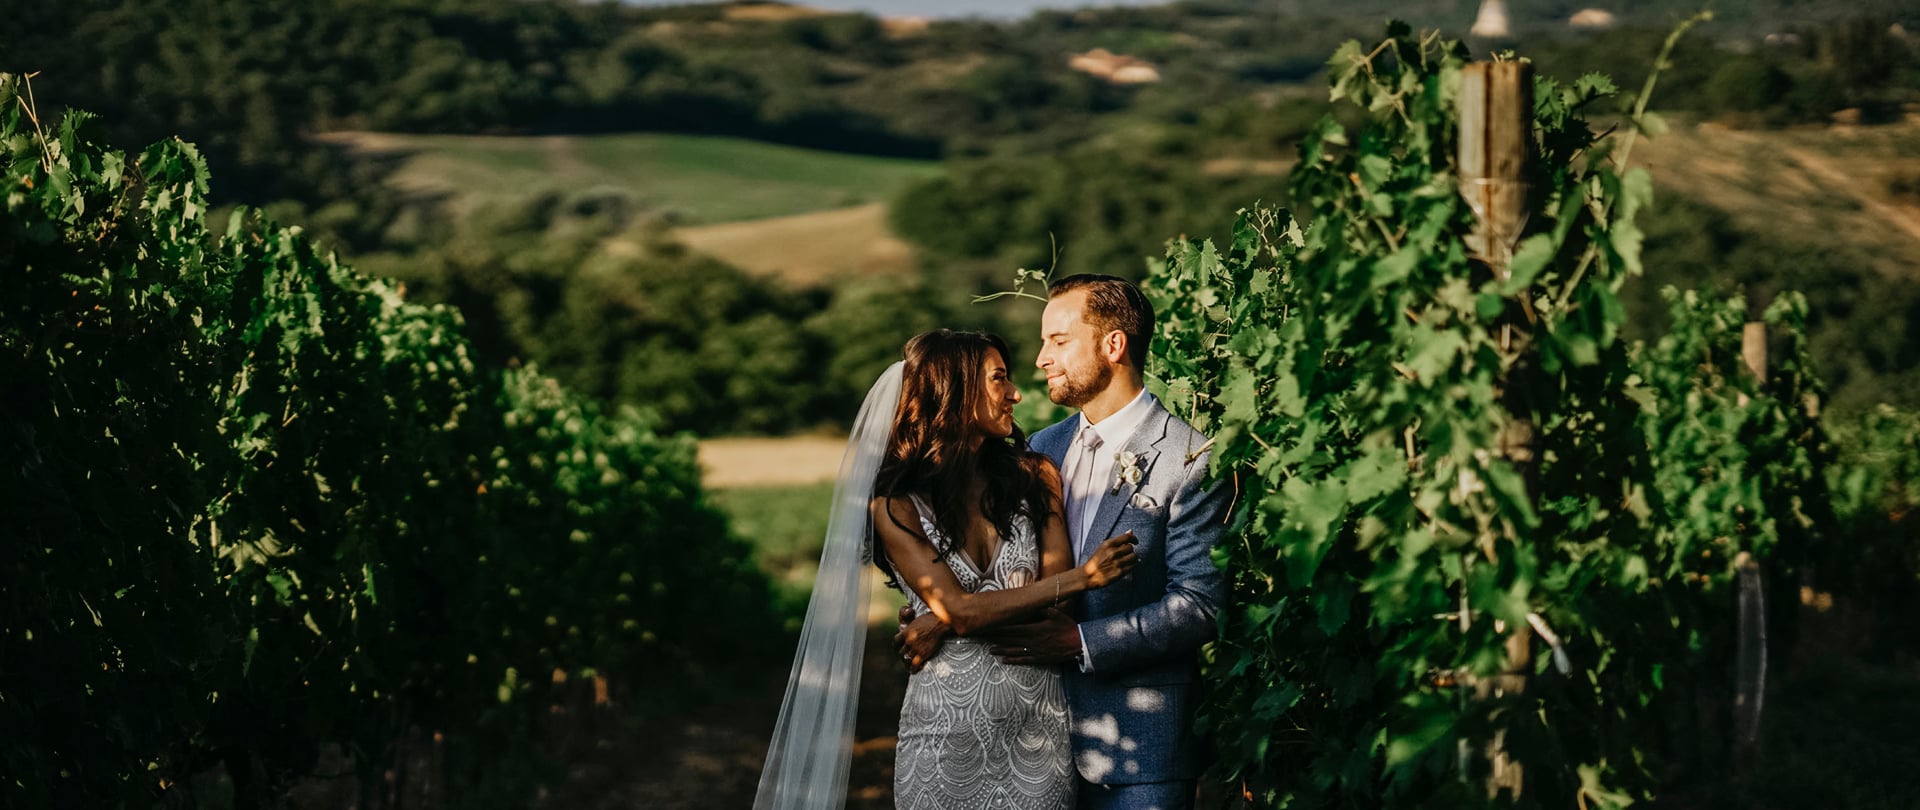 Victoria & Alex Wedding Video Filmed at Tuscany, Italy